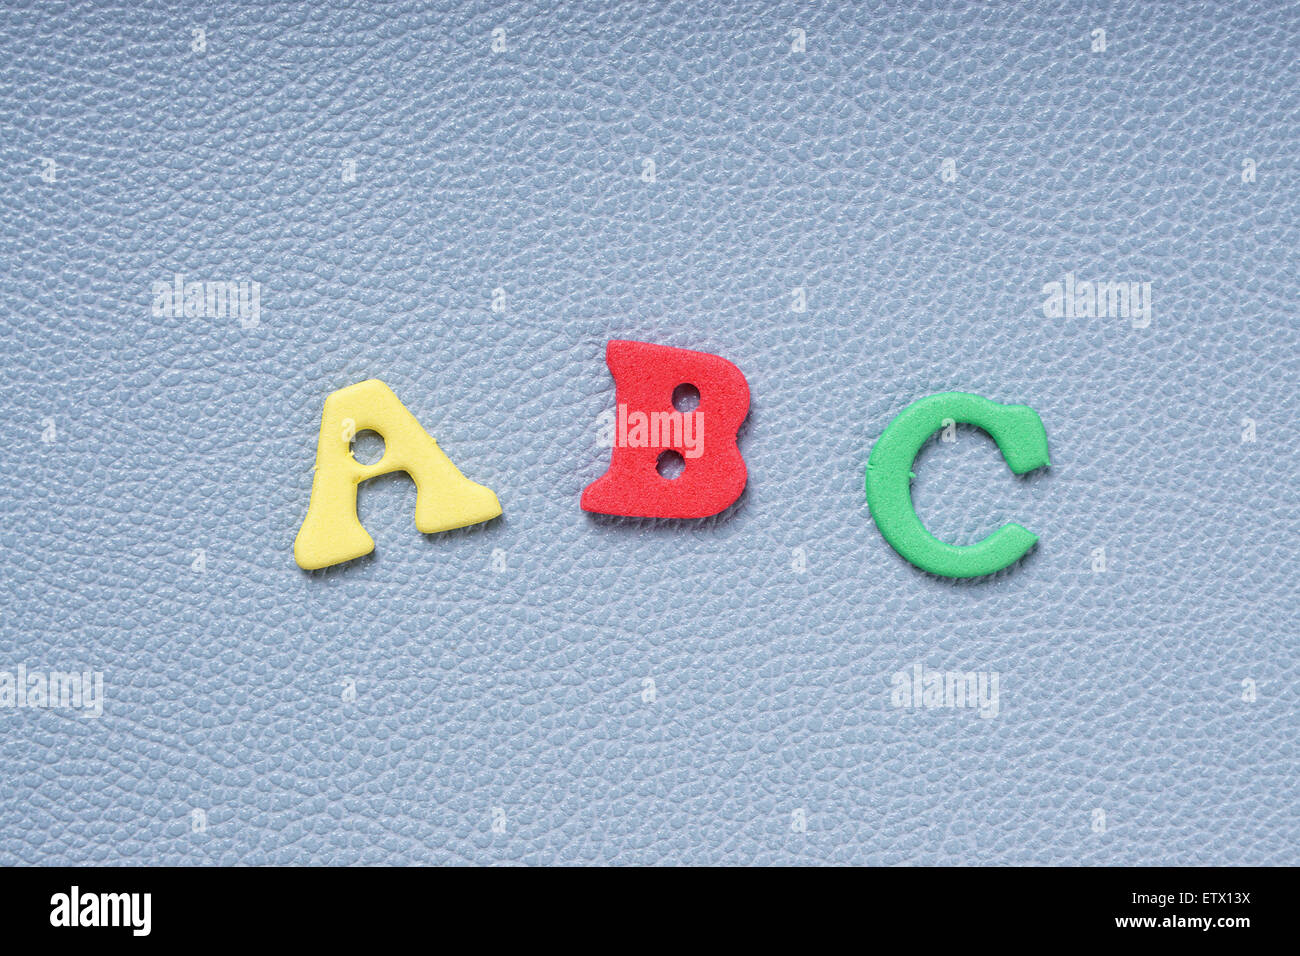 ABC in foam rubber letters Stock Photo